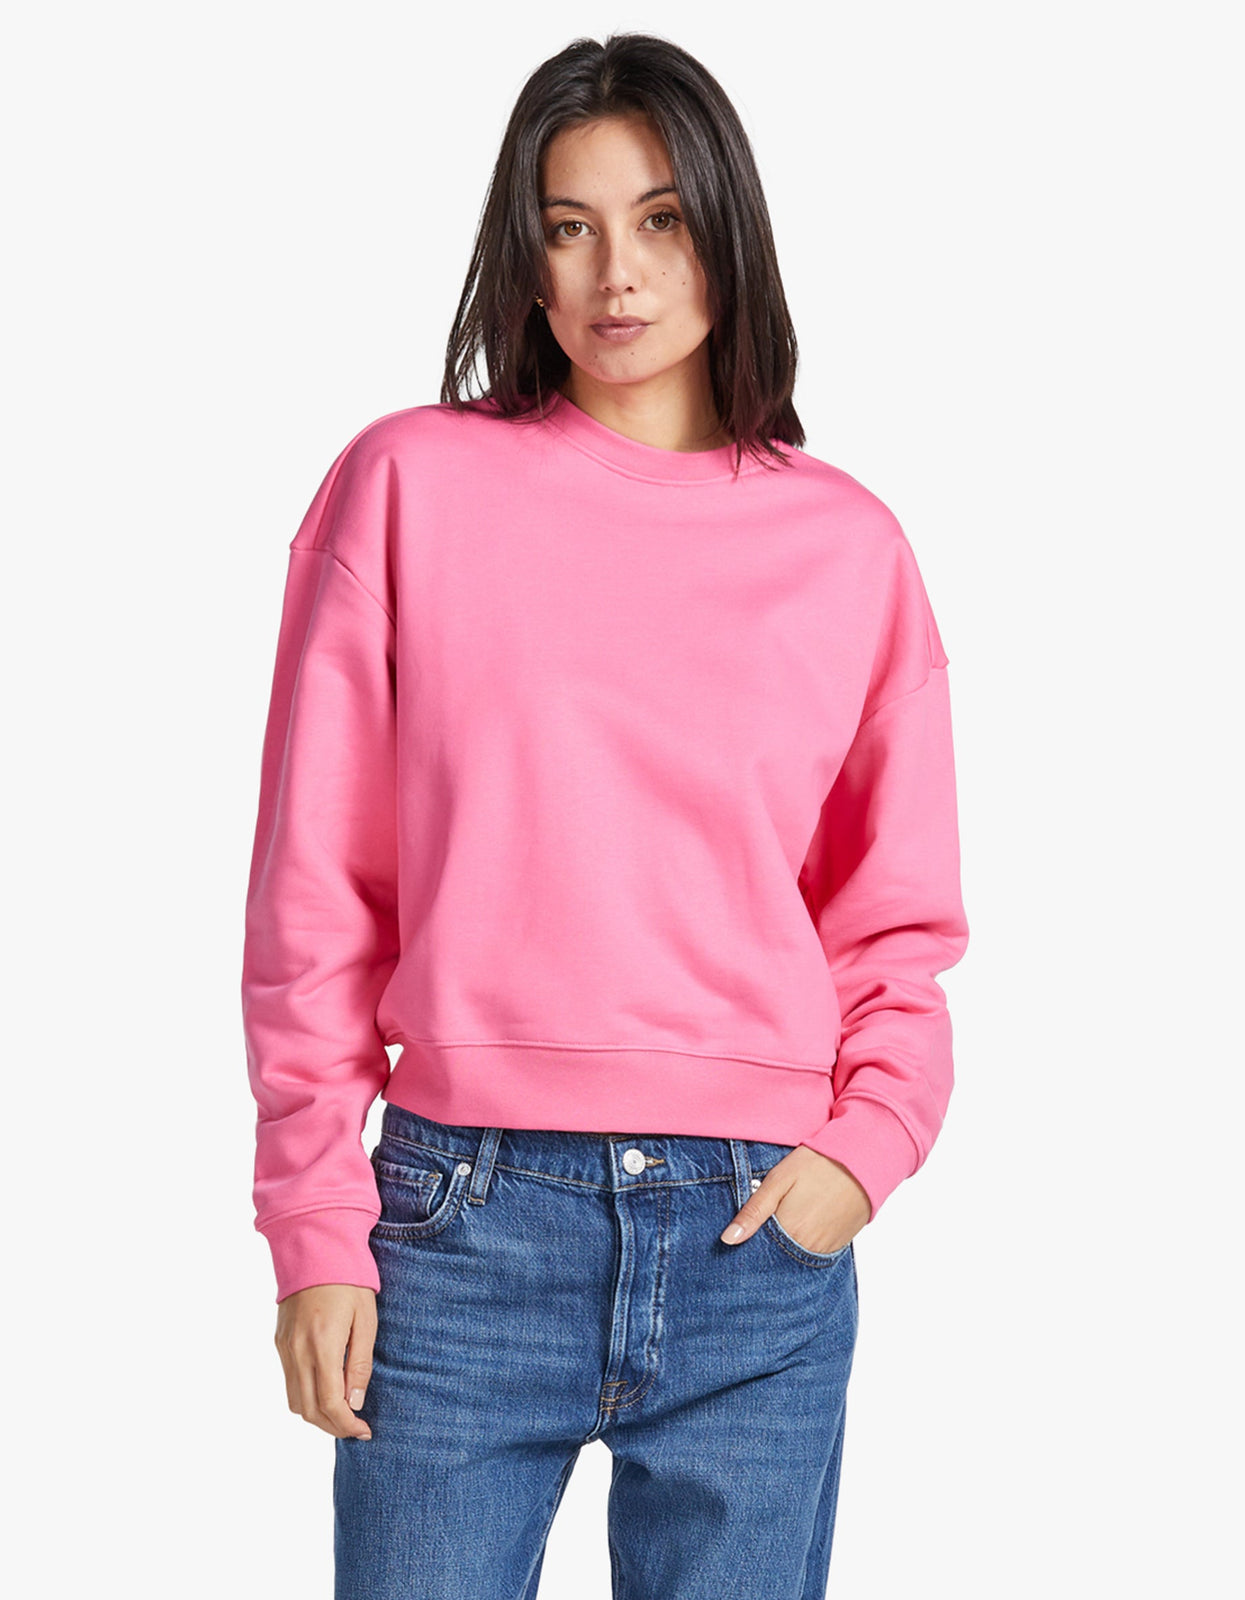 Superette  Oversized Crew Sweatshirt - Hot Pink